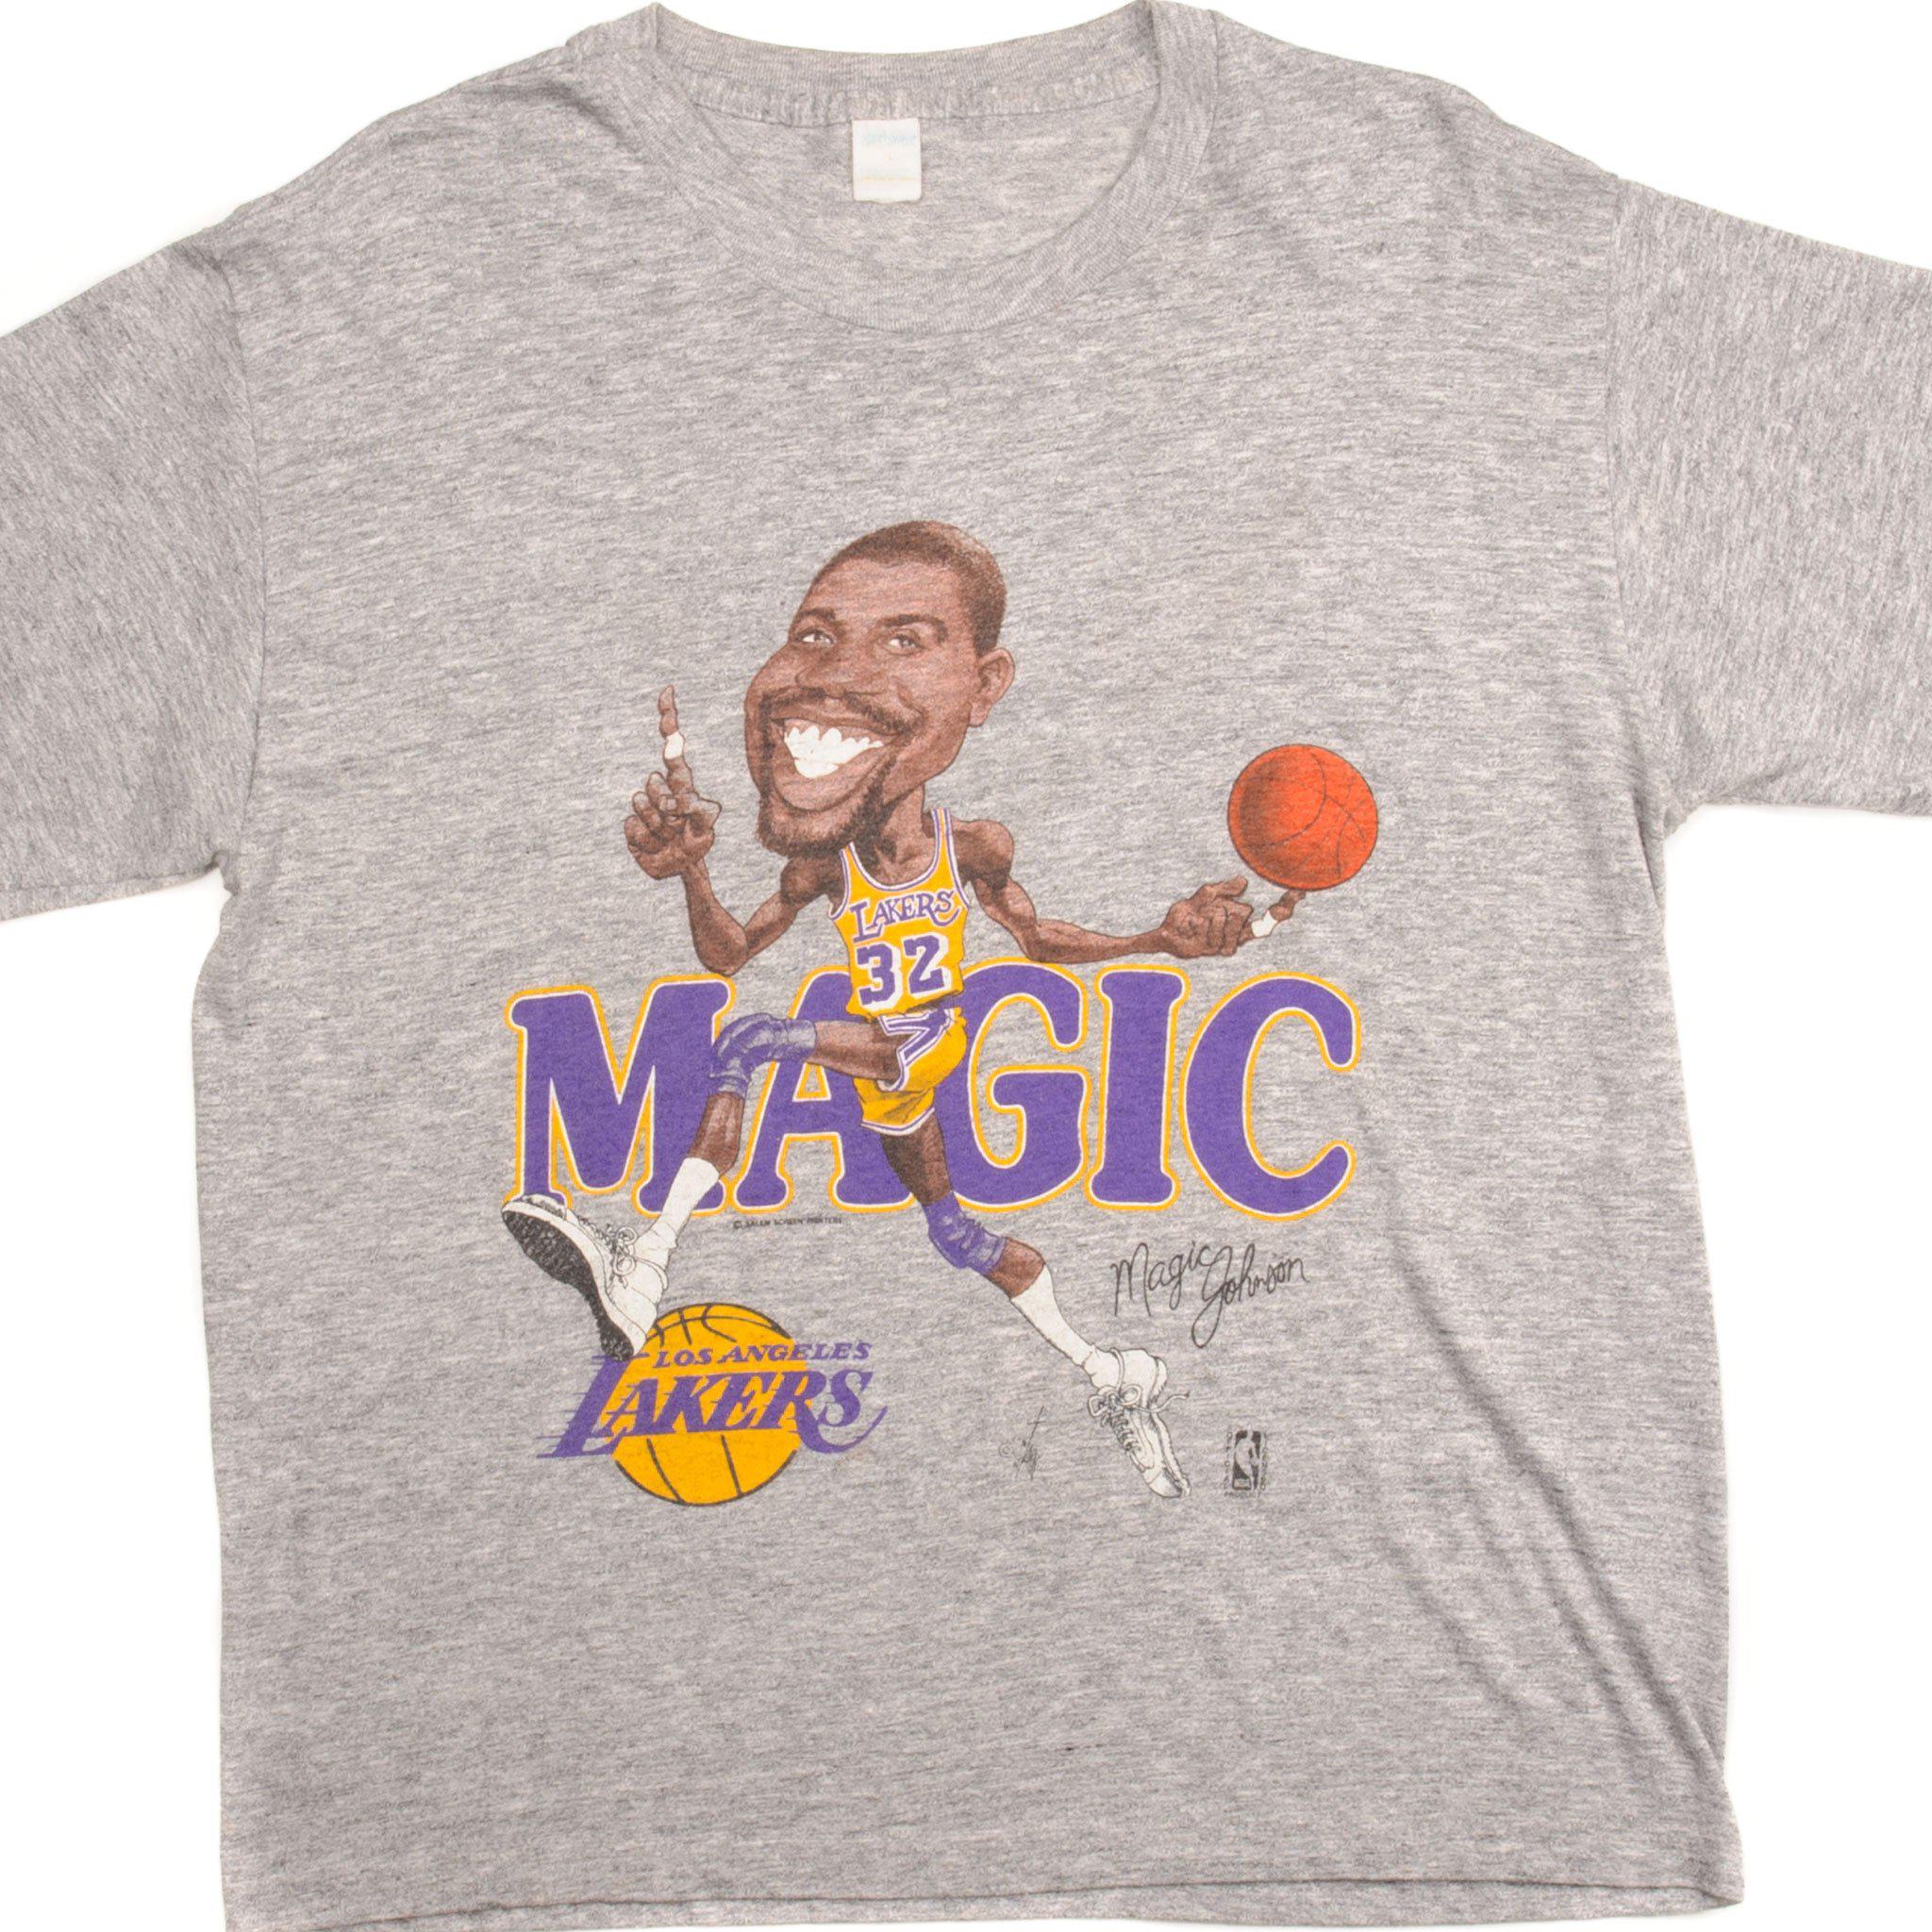 Lakers Shirt / Vintage / Los Angeles Lakers / NBA Basketball / 